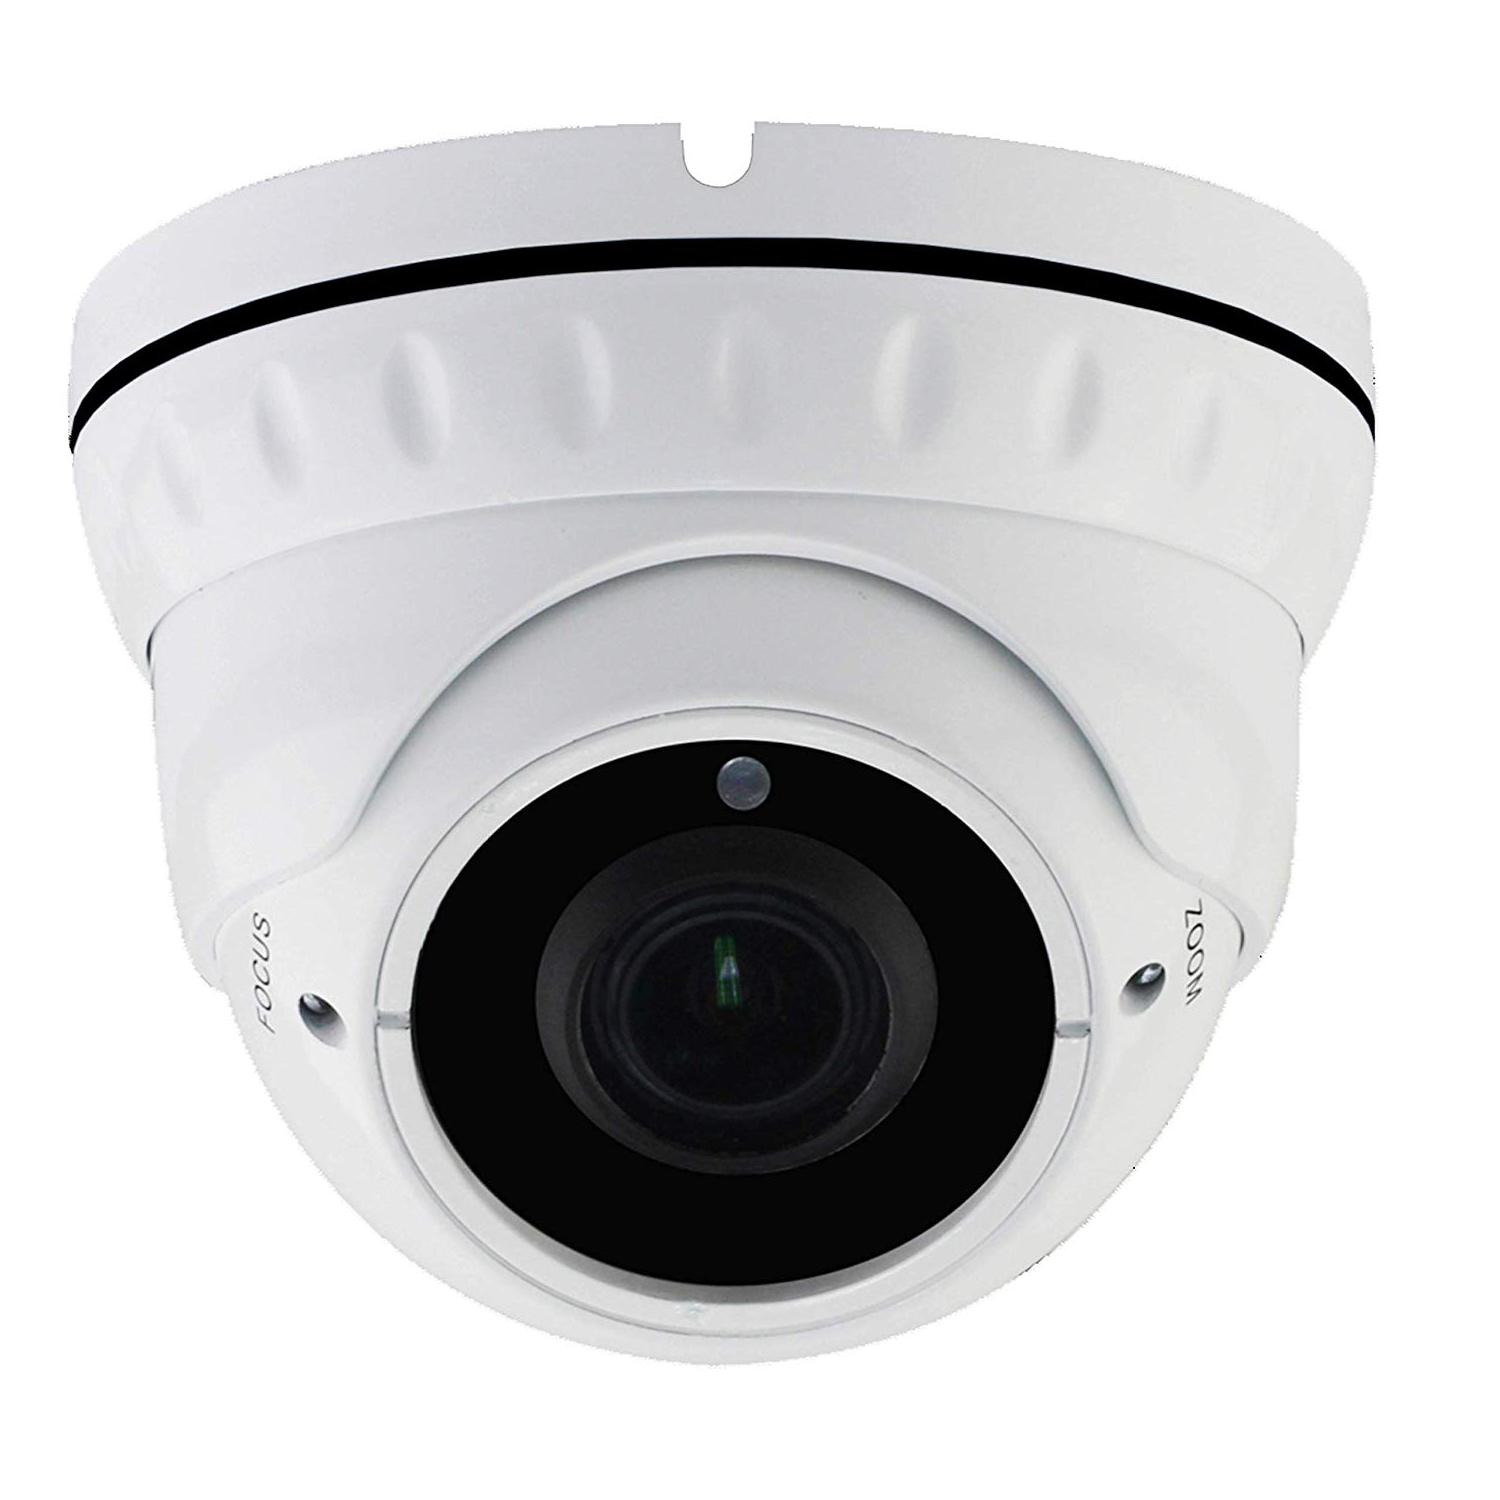 2MP 4in1 TVI/AHD/CVI/CVBS 2.8-12mm Lens Surveillance Dome Camera DWDR OSD menu Indoor Outdoor for CCTV DVR Home Office Surveillance Security (White) - 101AVInc.